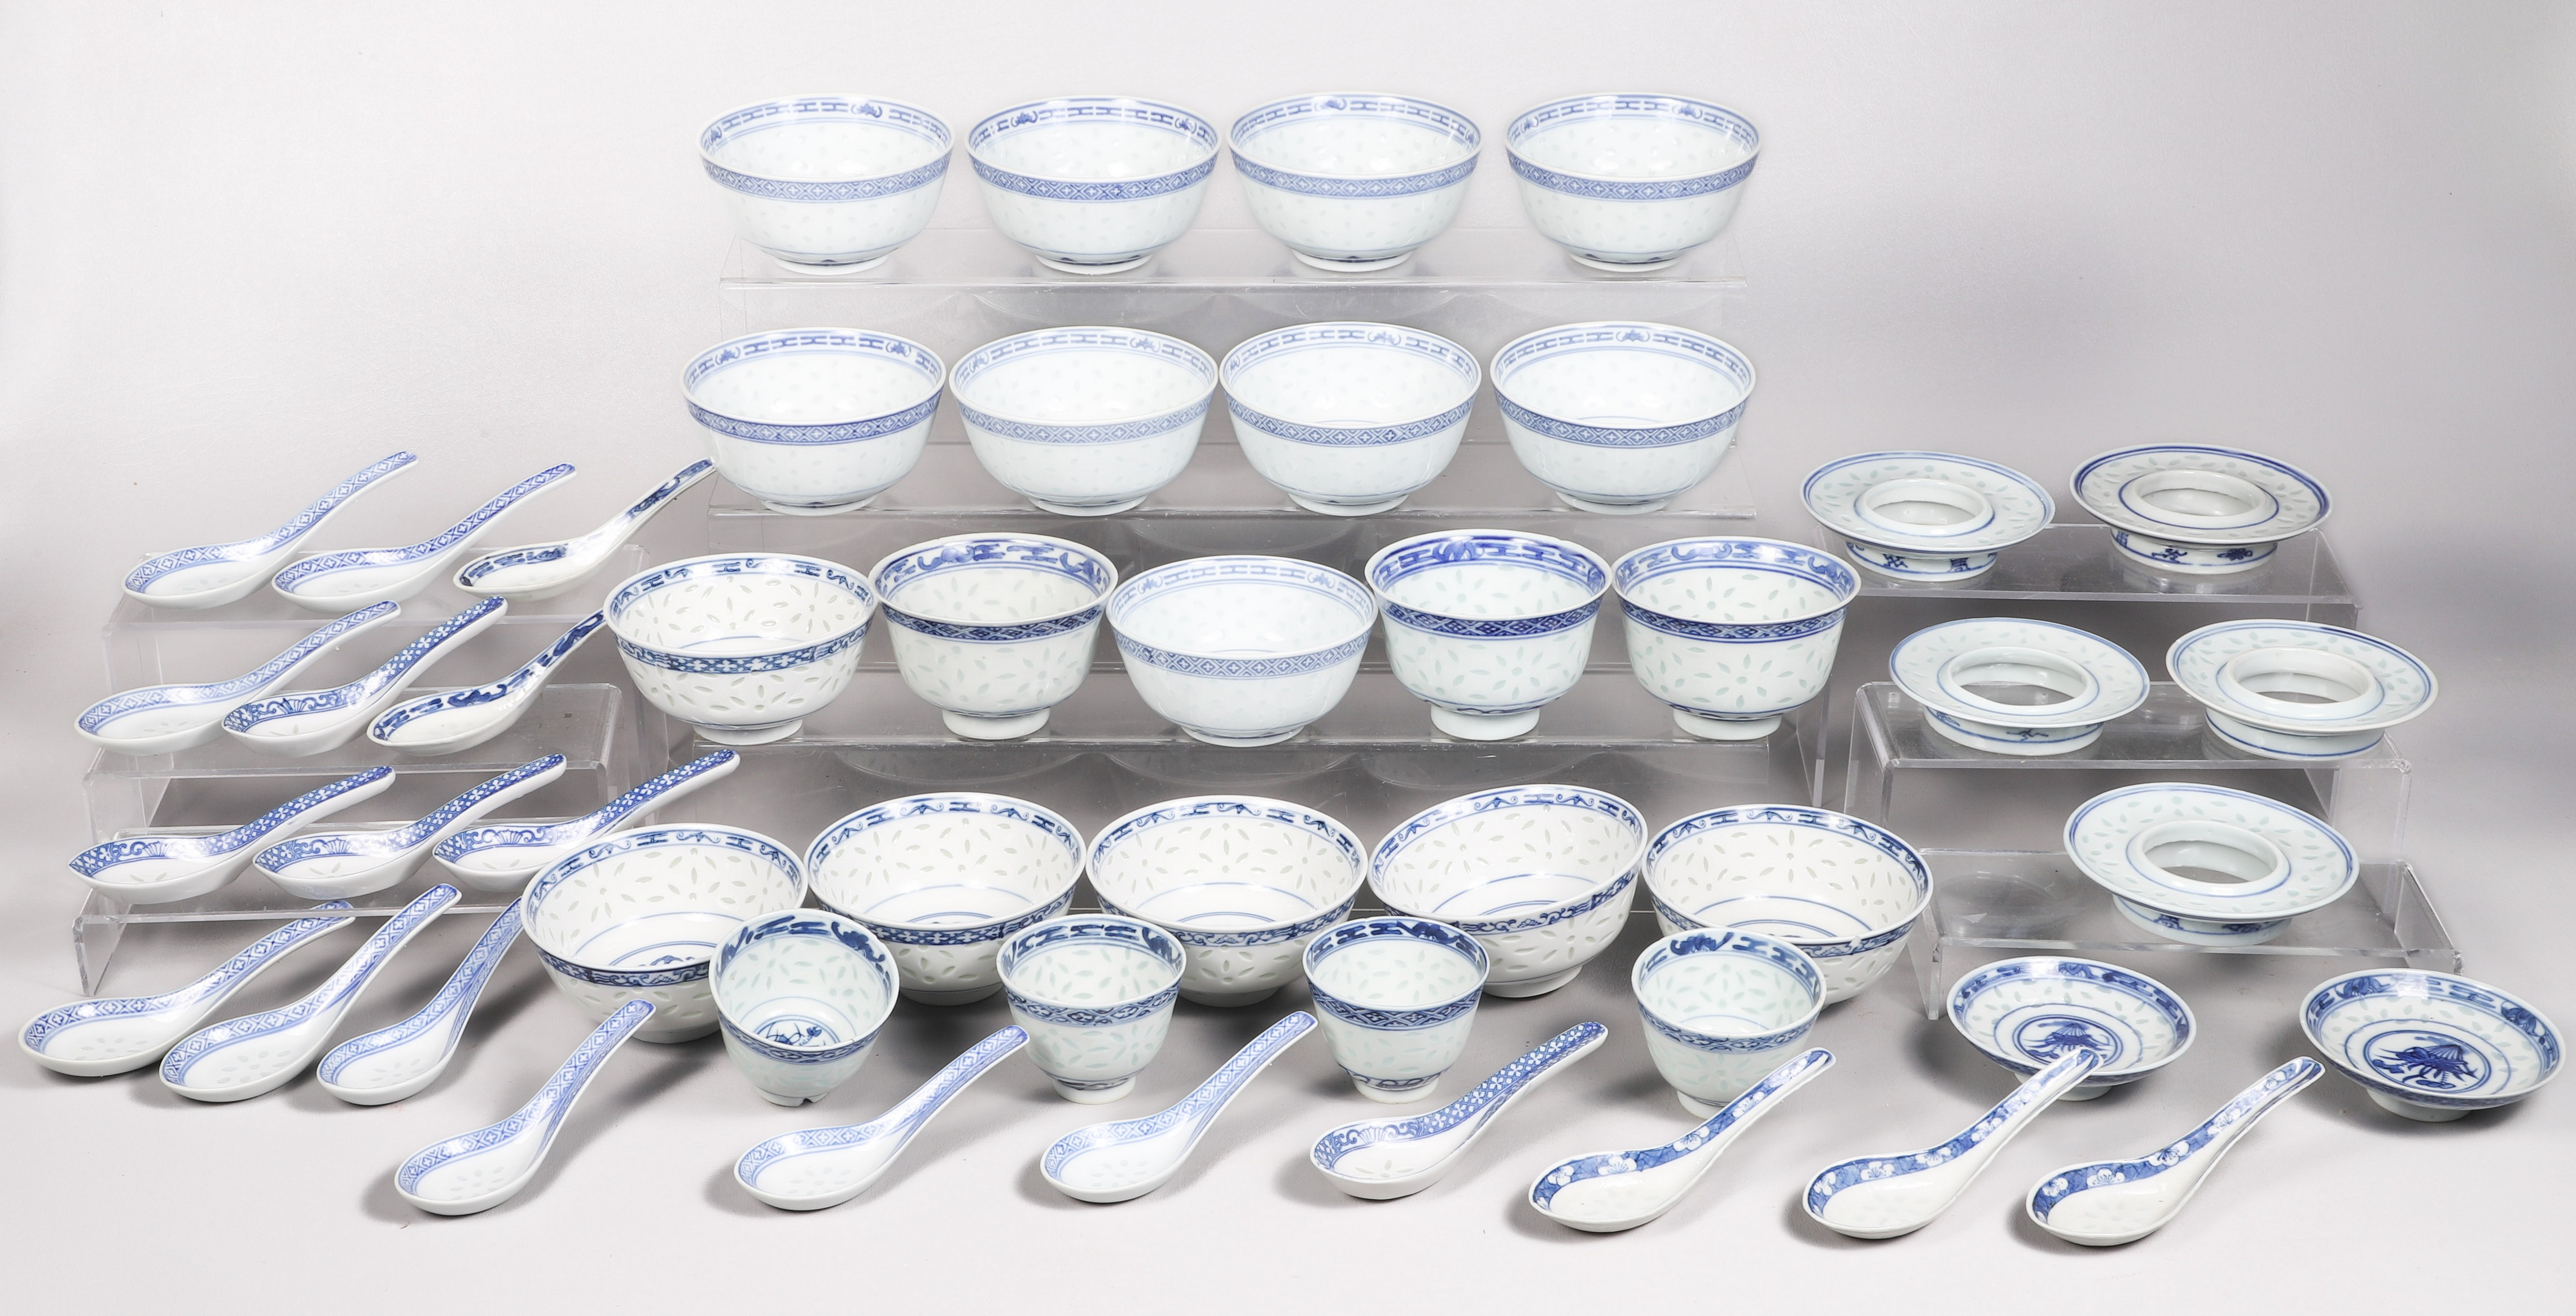 Asian riceware porcelain grouping 2e0cd5